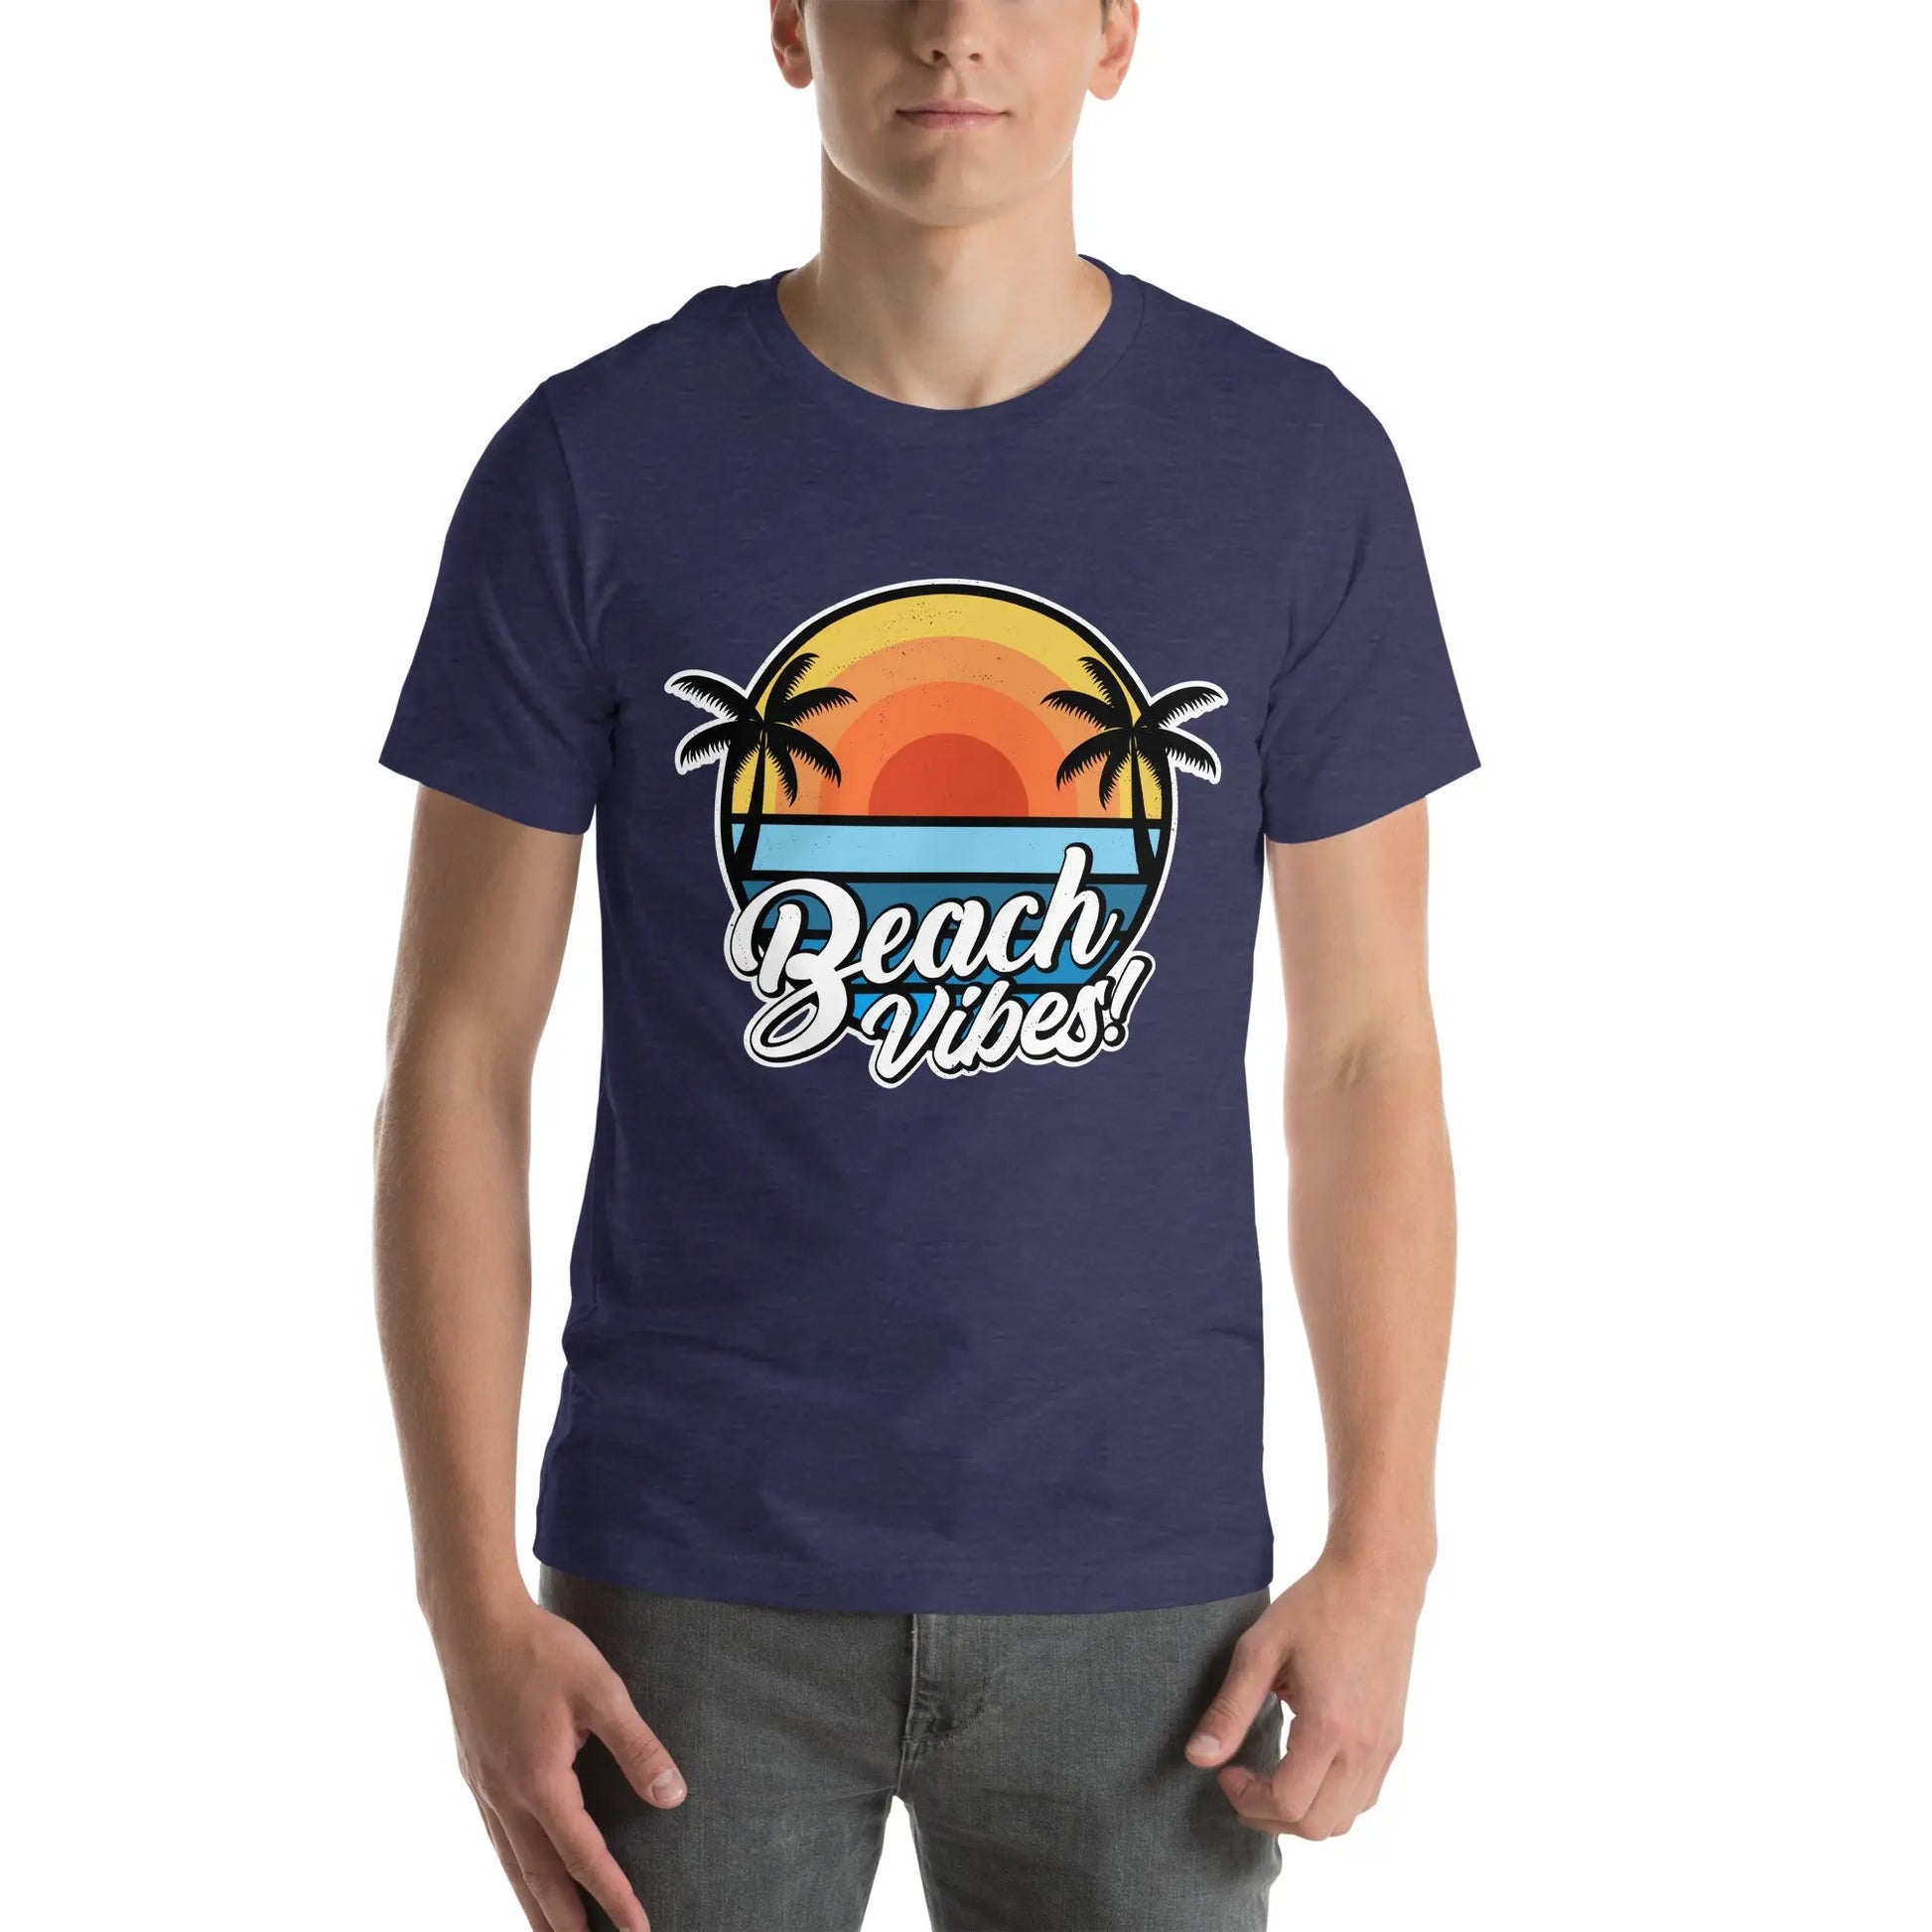 Beach Vibes with this Coastal Adult Unisex T-Shirt - Coastal Journeyz9496443_8495